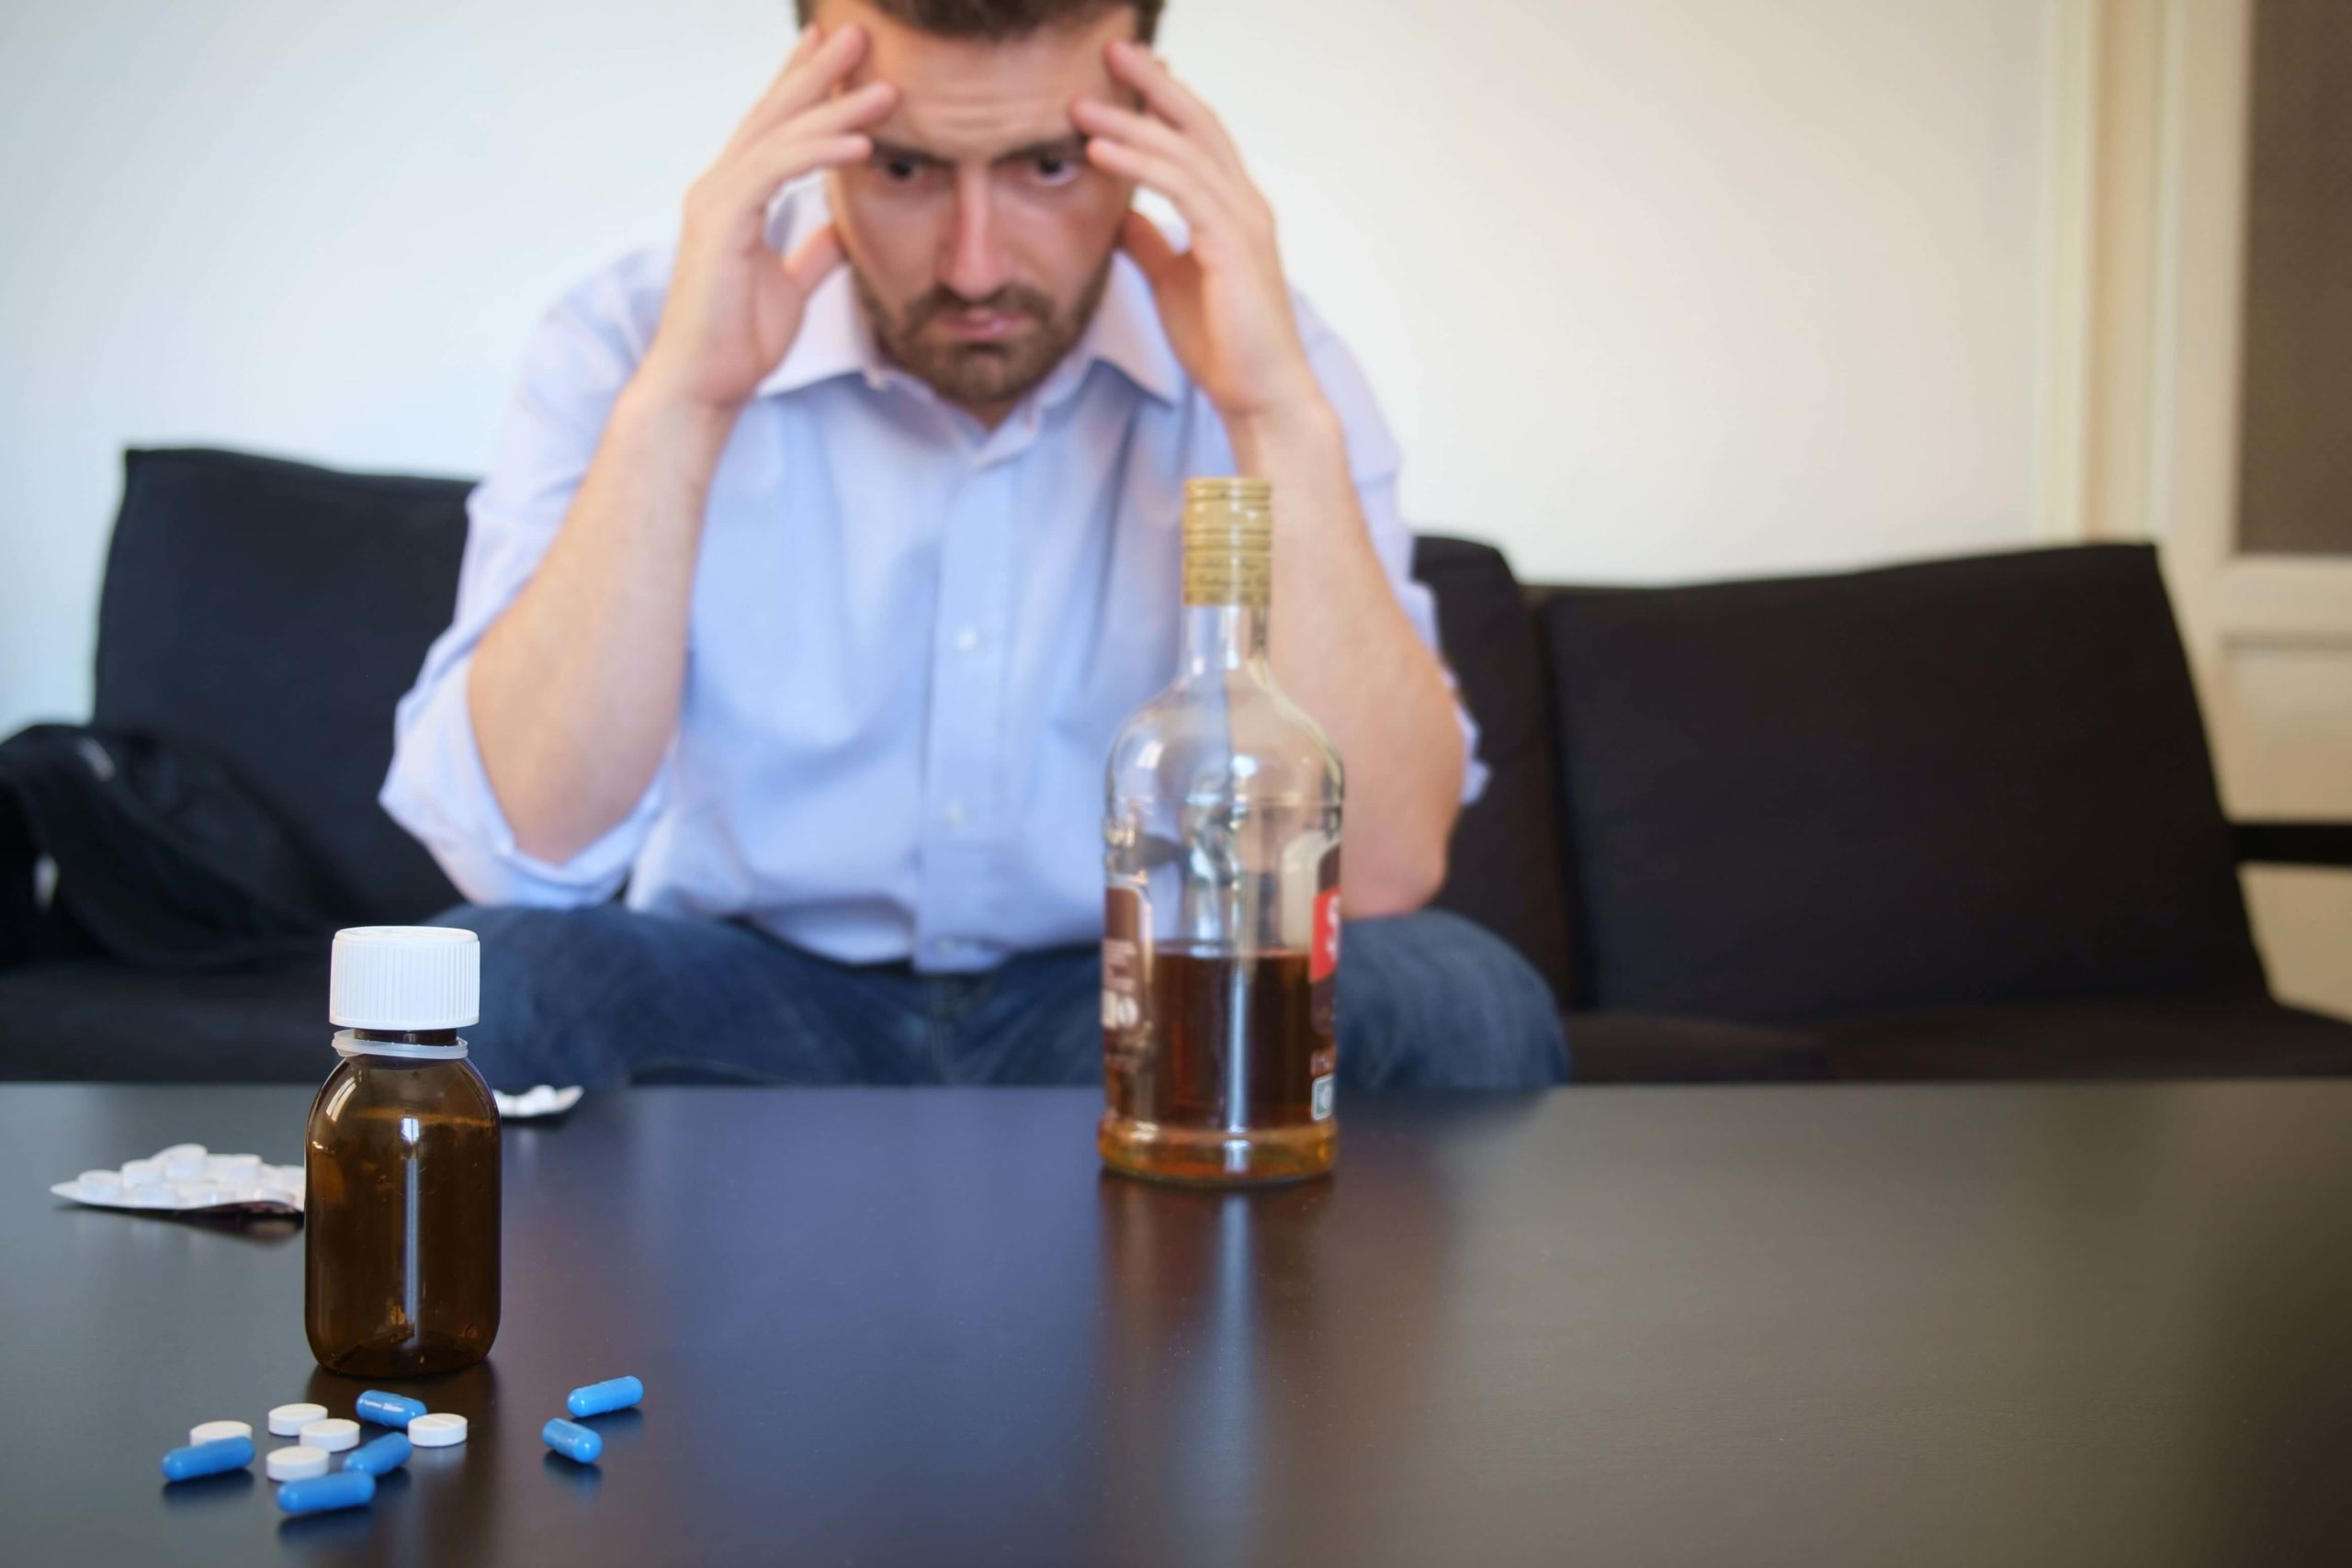 depressed man drinking alcohol and taking bipolar medications